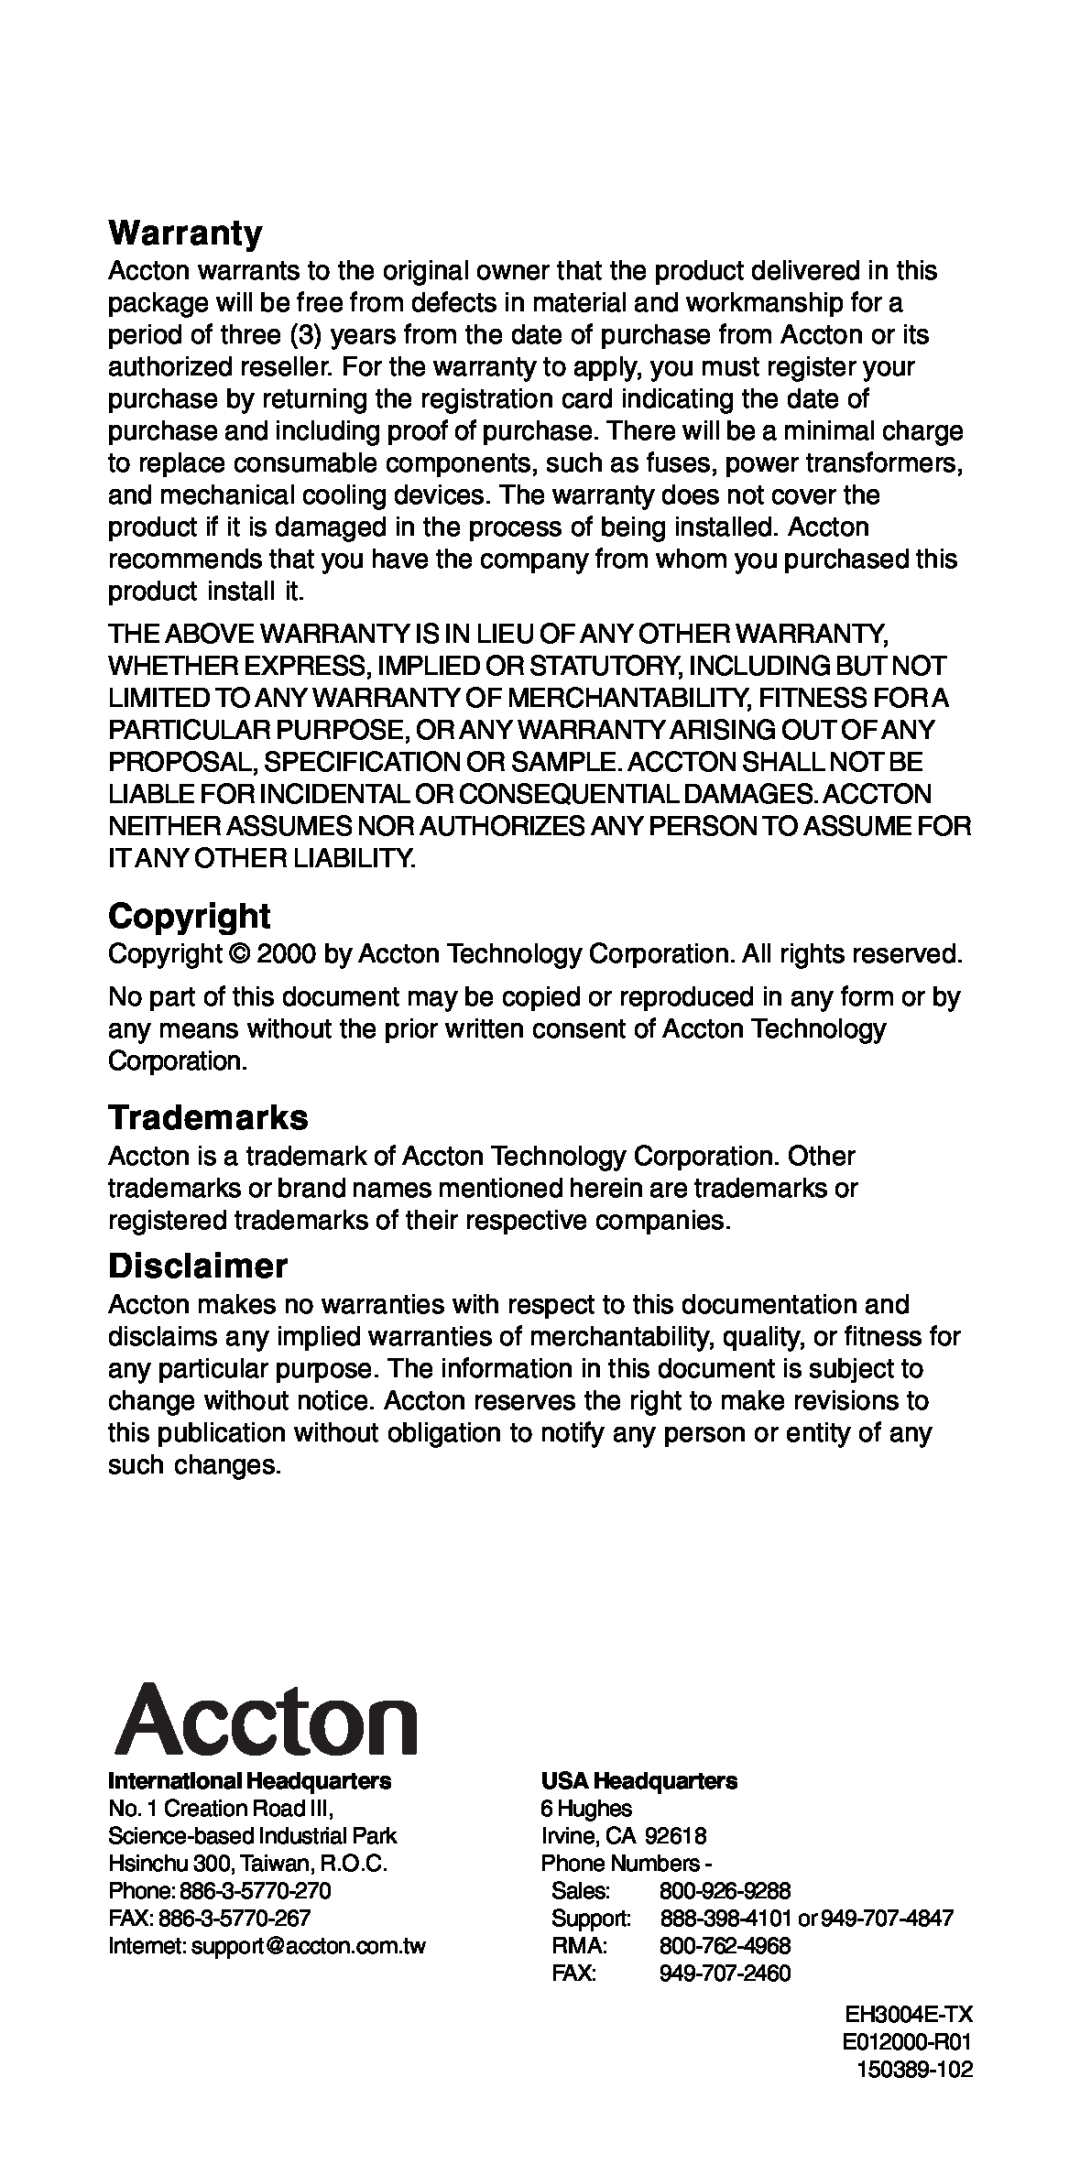 Accton Technology POWER-3004E Warranty, Copyright, Trademarks, Disclaimer, International Headquarters, USA Headquarters 